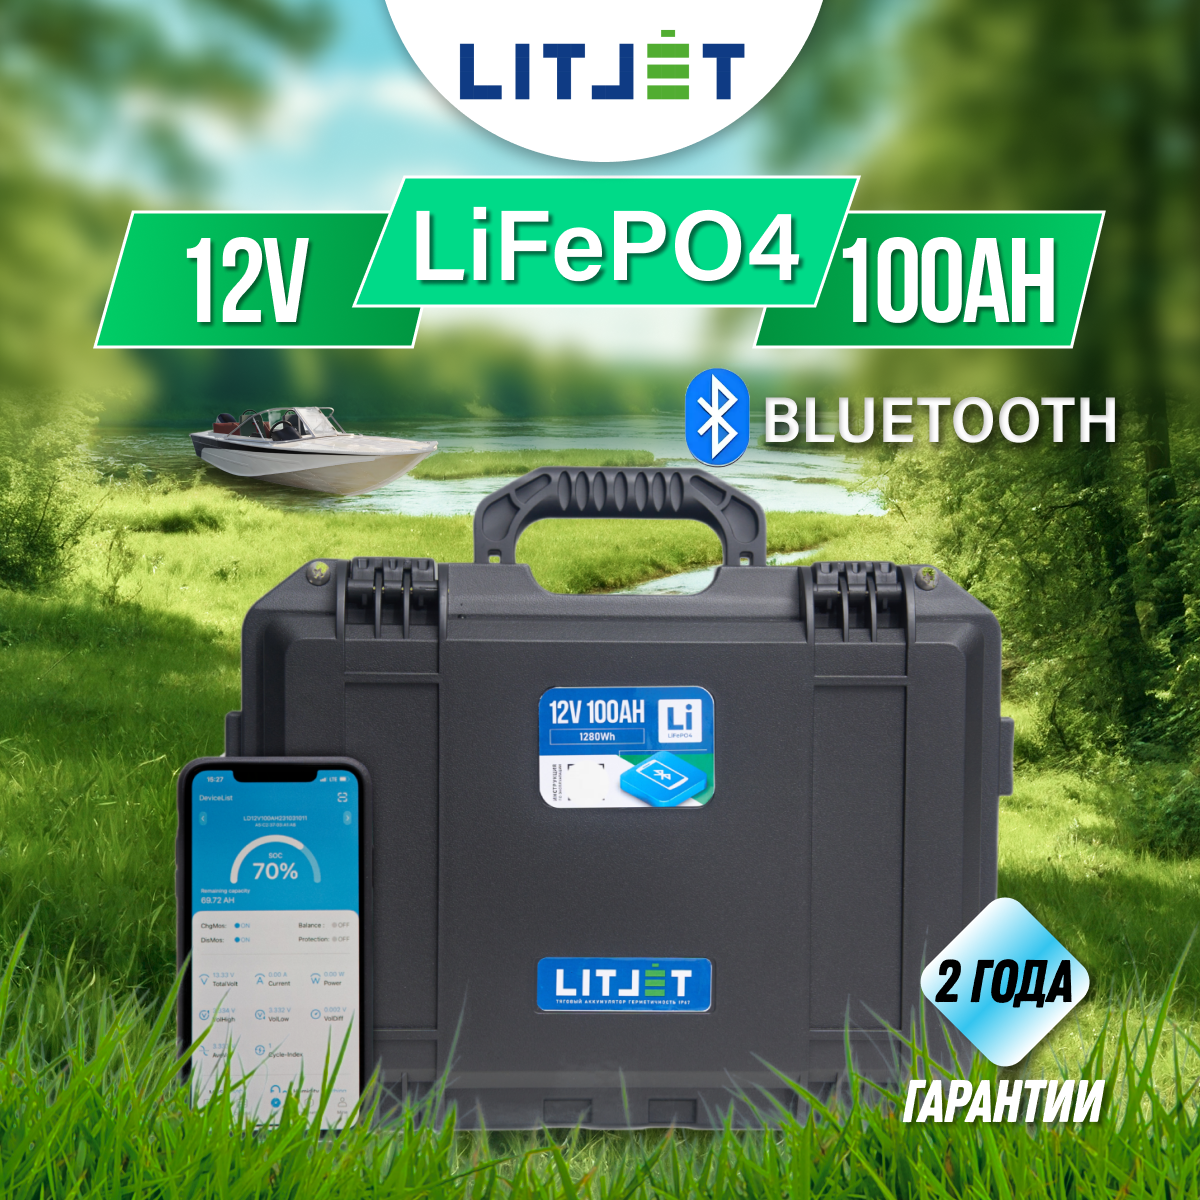 Тяговый аккумулятор LITJET LiFePO4 12V 100Ah c Bluetooth